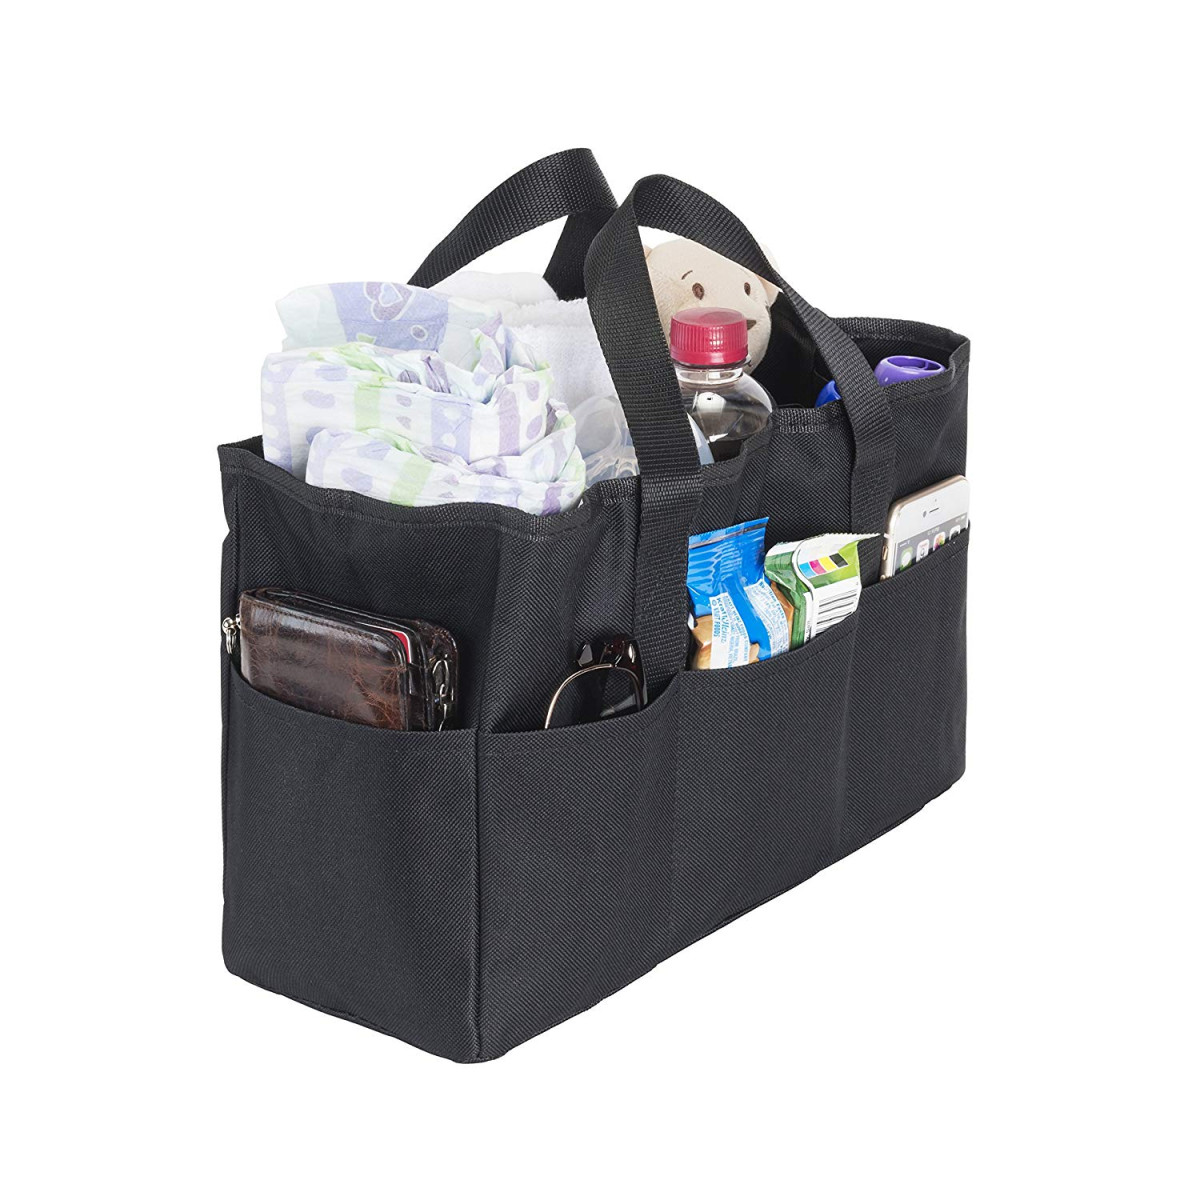 Handbag Backpack Transform Any Moms Purse Or Tote Bag Diaper Bag Insert Organizer for Mom with 5 Outside & 6 Inside Storage Pockets 